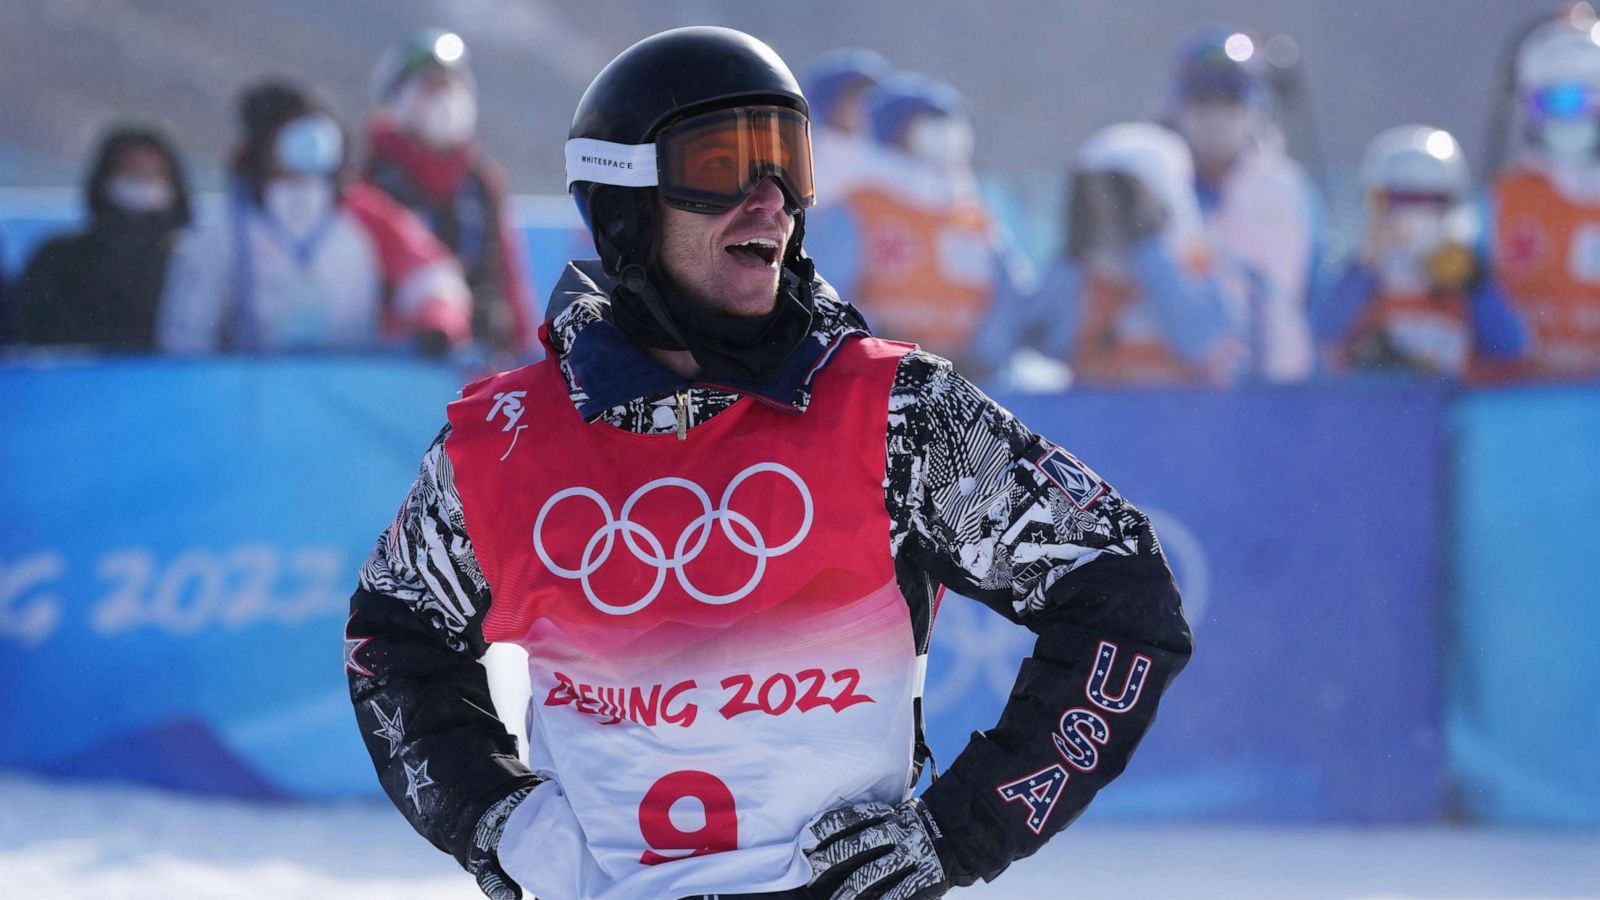 Shaun White misses podium in final Olympics as Japan's Ayumu